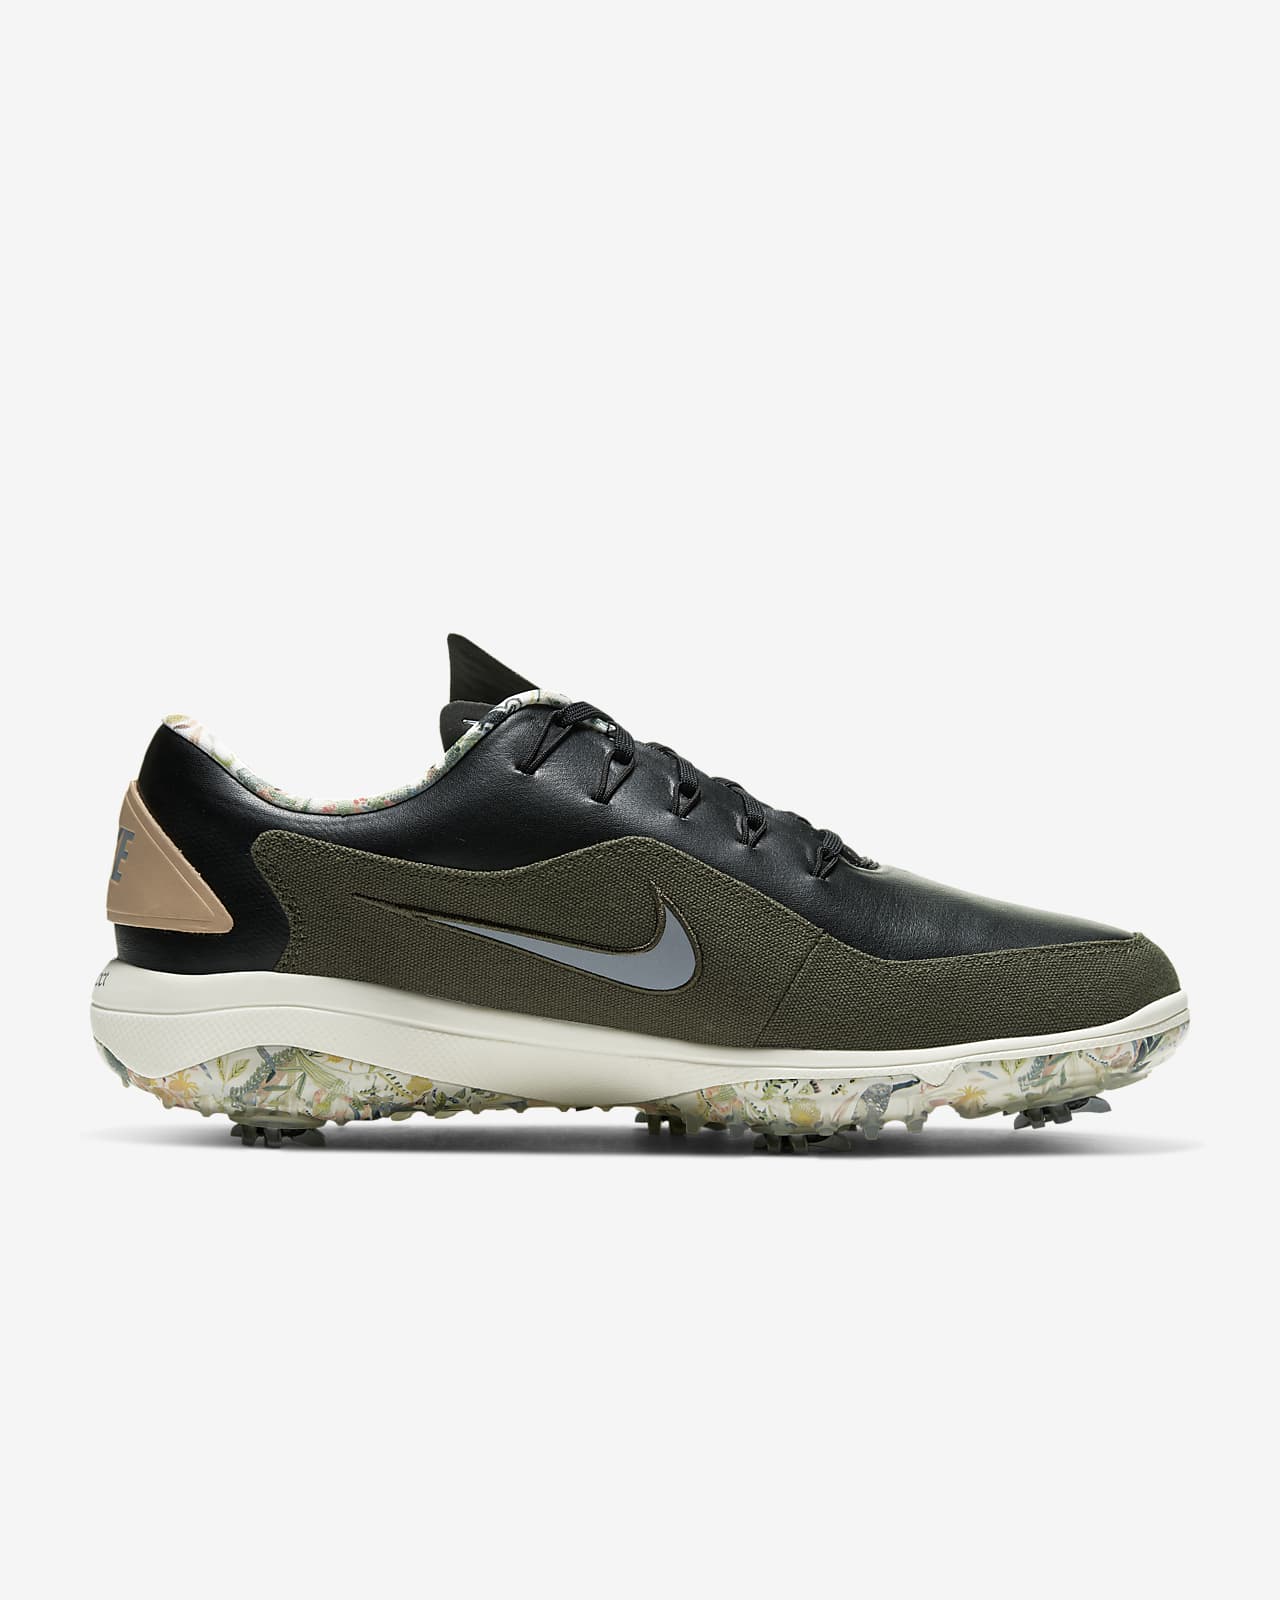 Nike React Vapor 2 NRG Men's Golf Shoe 